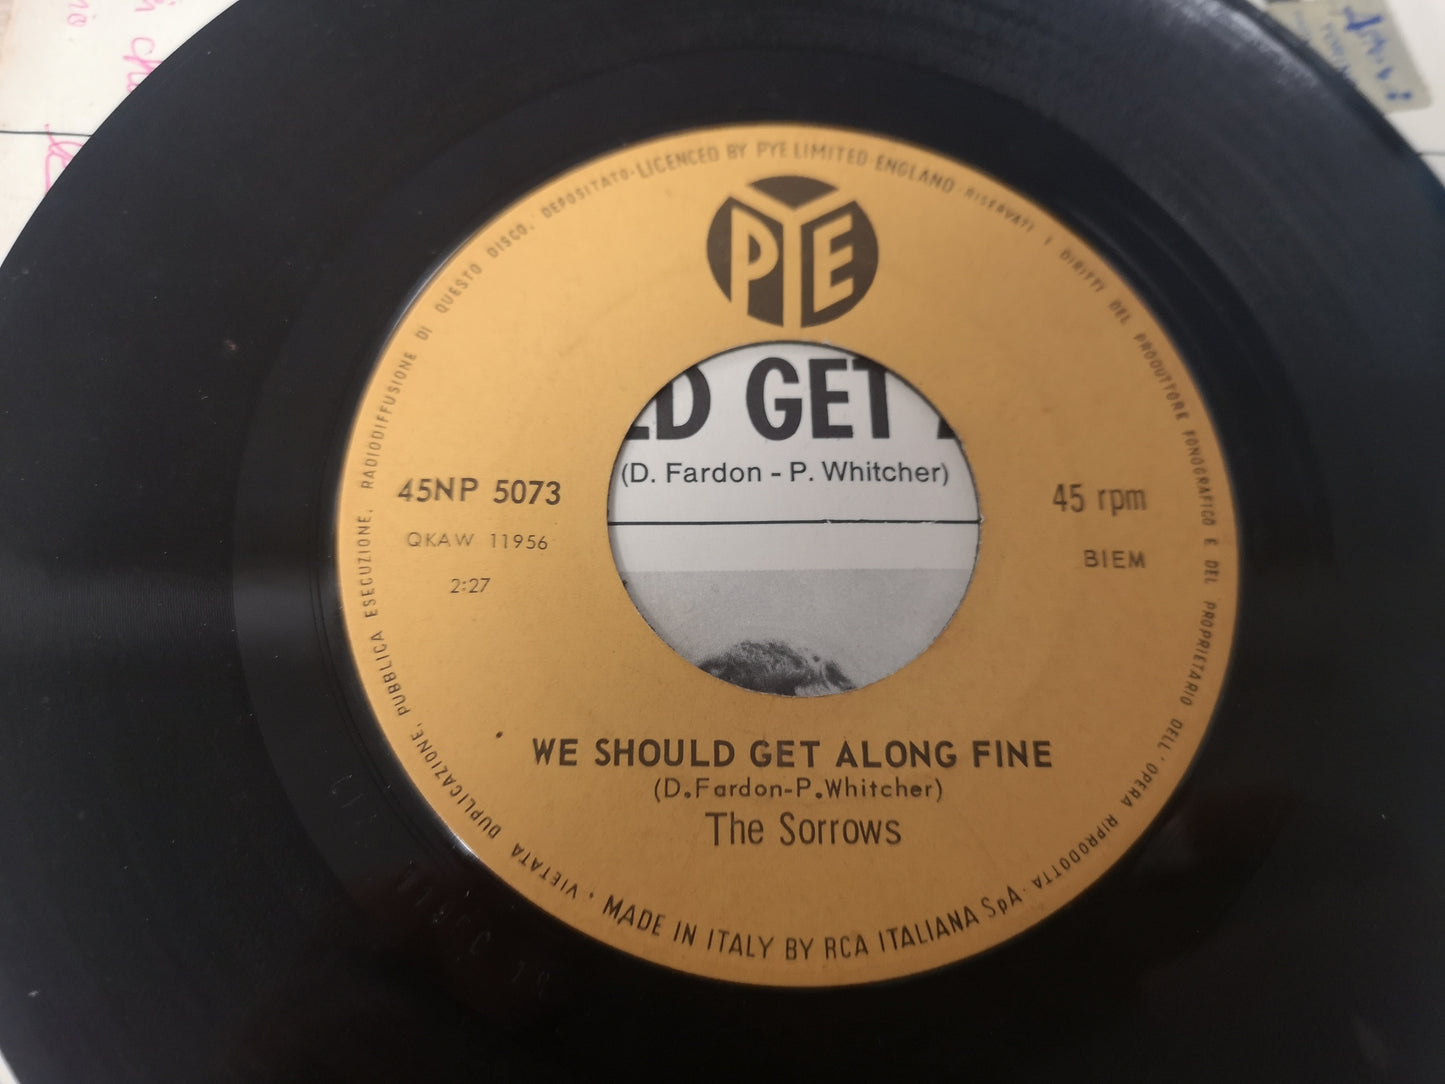 Sorrows "Take a Heart" Orig Italy 1965 VG++/VG++ (7" Single)